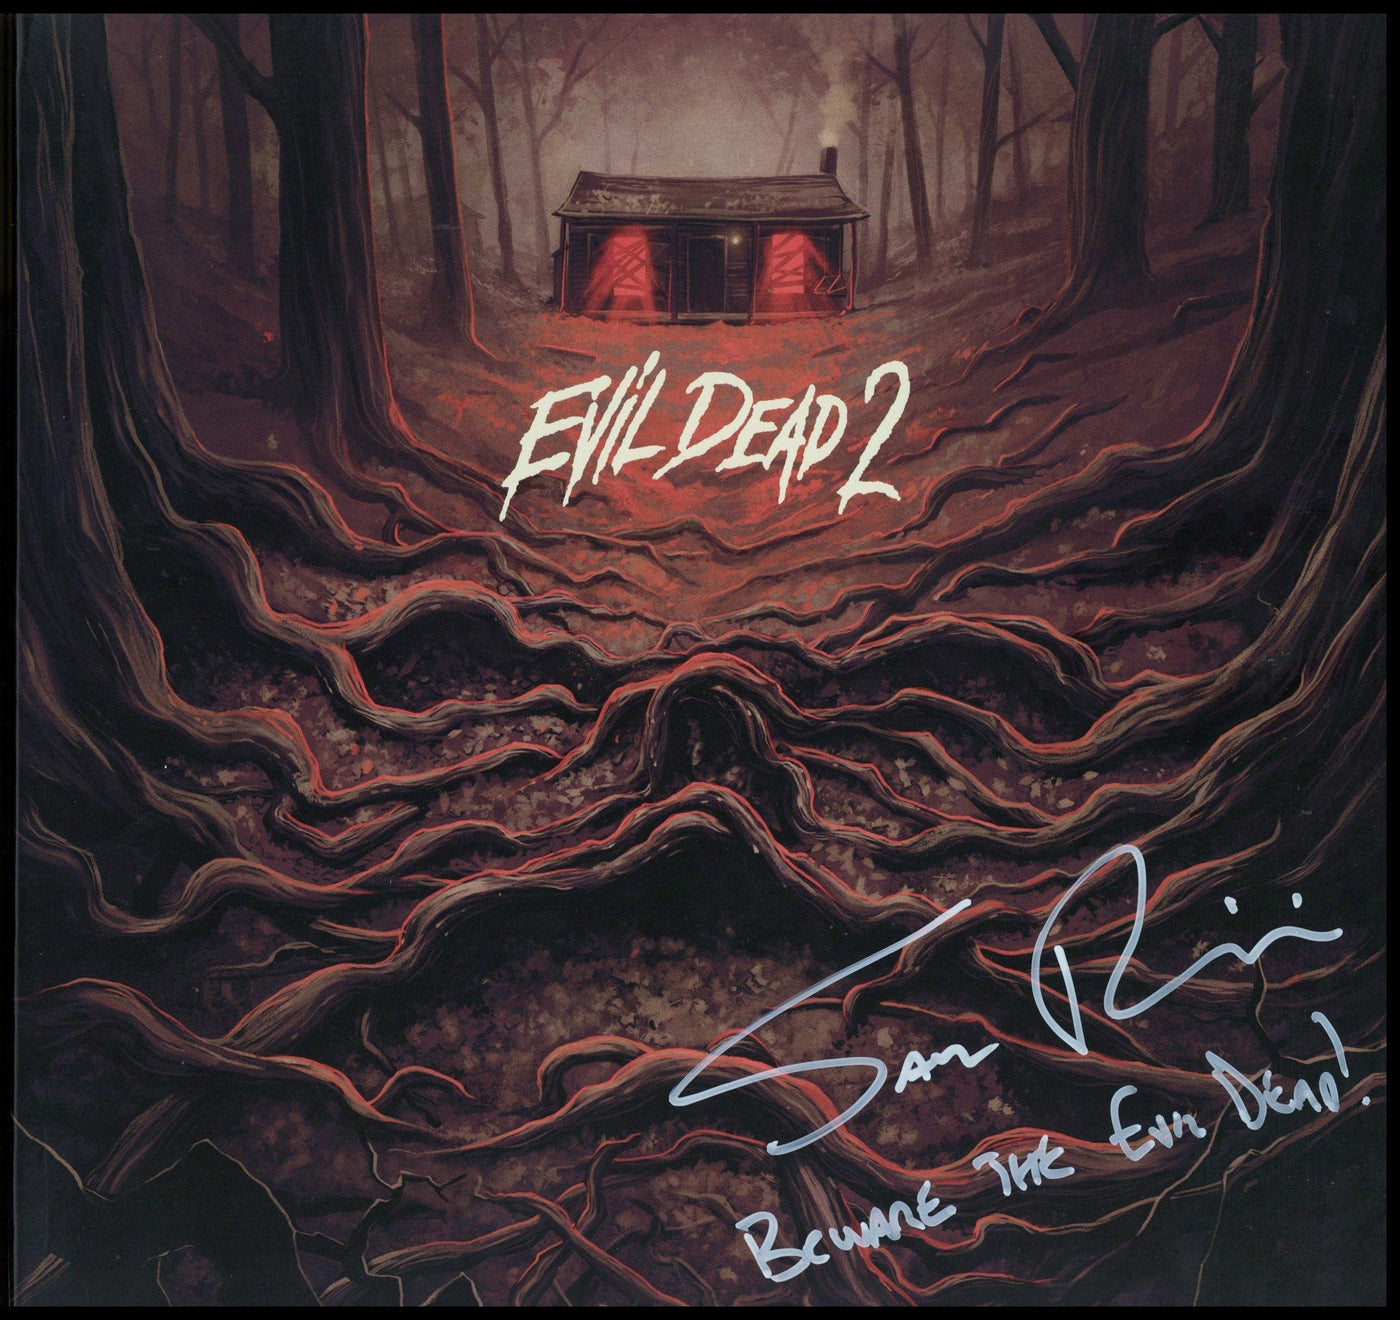 Sam Raimi Signed Evil Dead 2 Vinyl LP Limited Autographed JSA COA